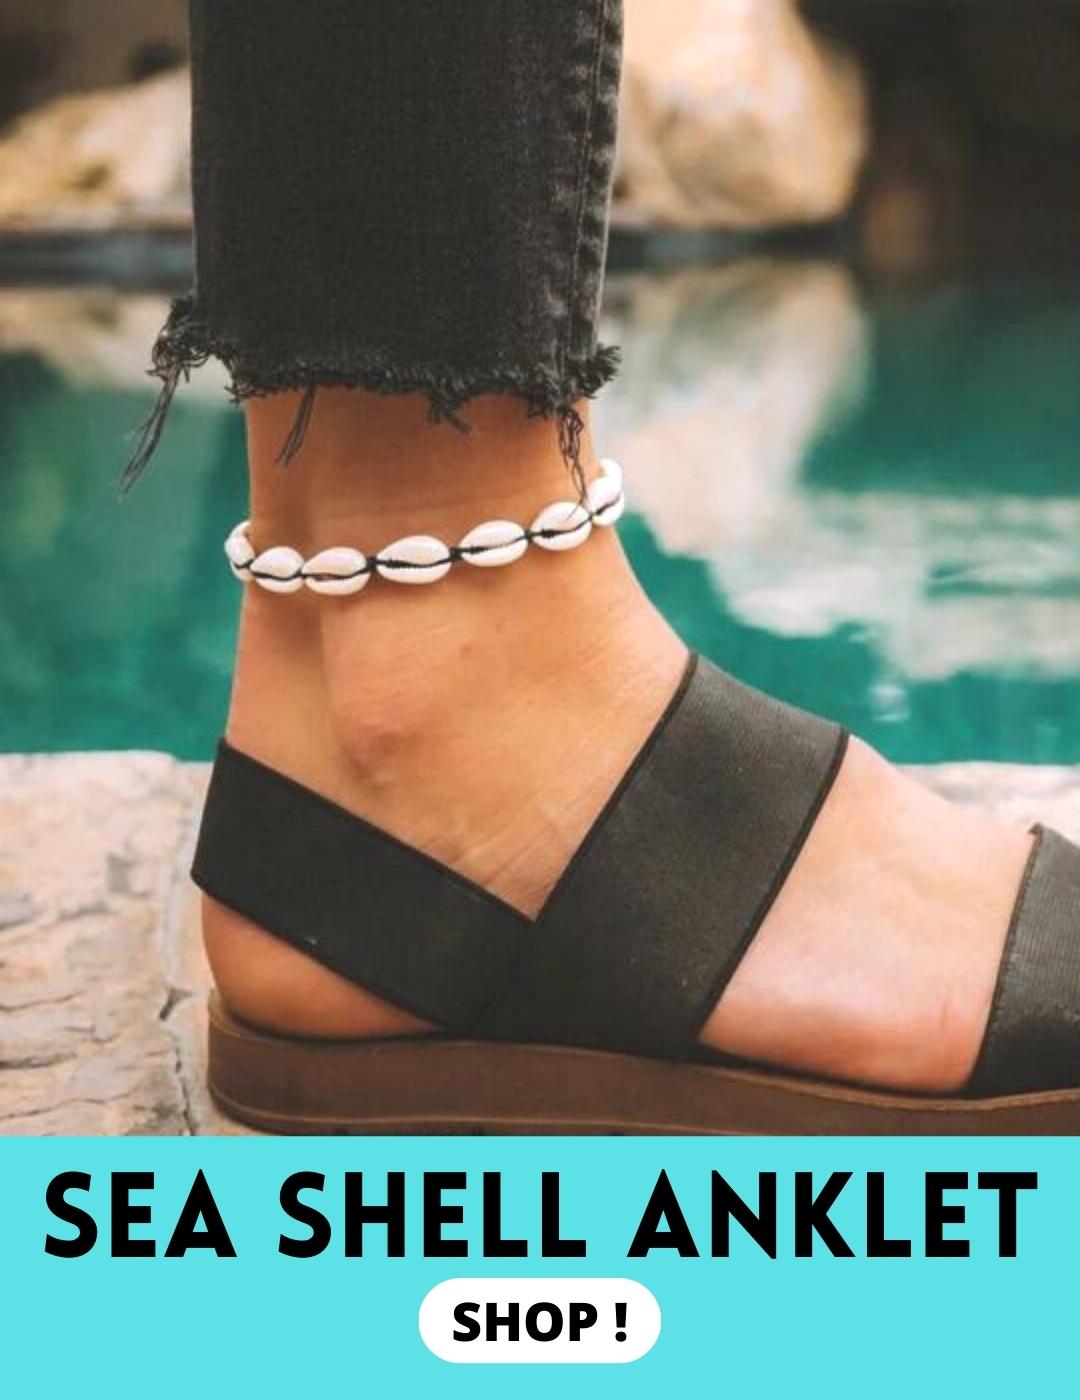 Seashells' meaning